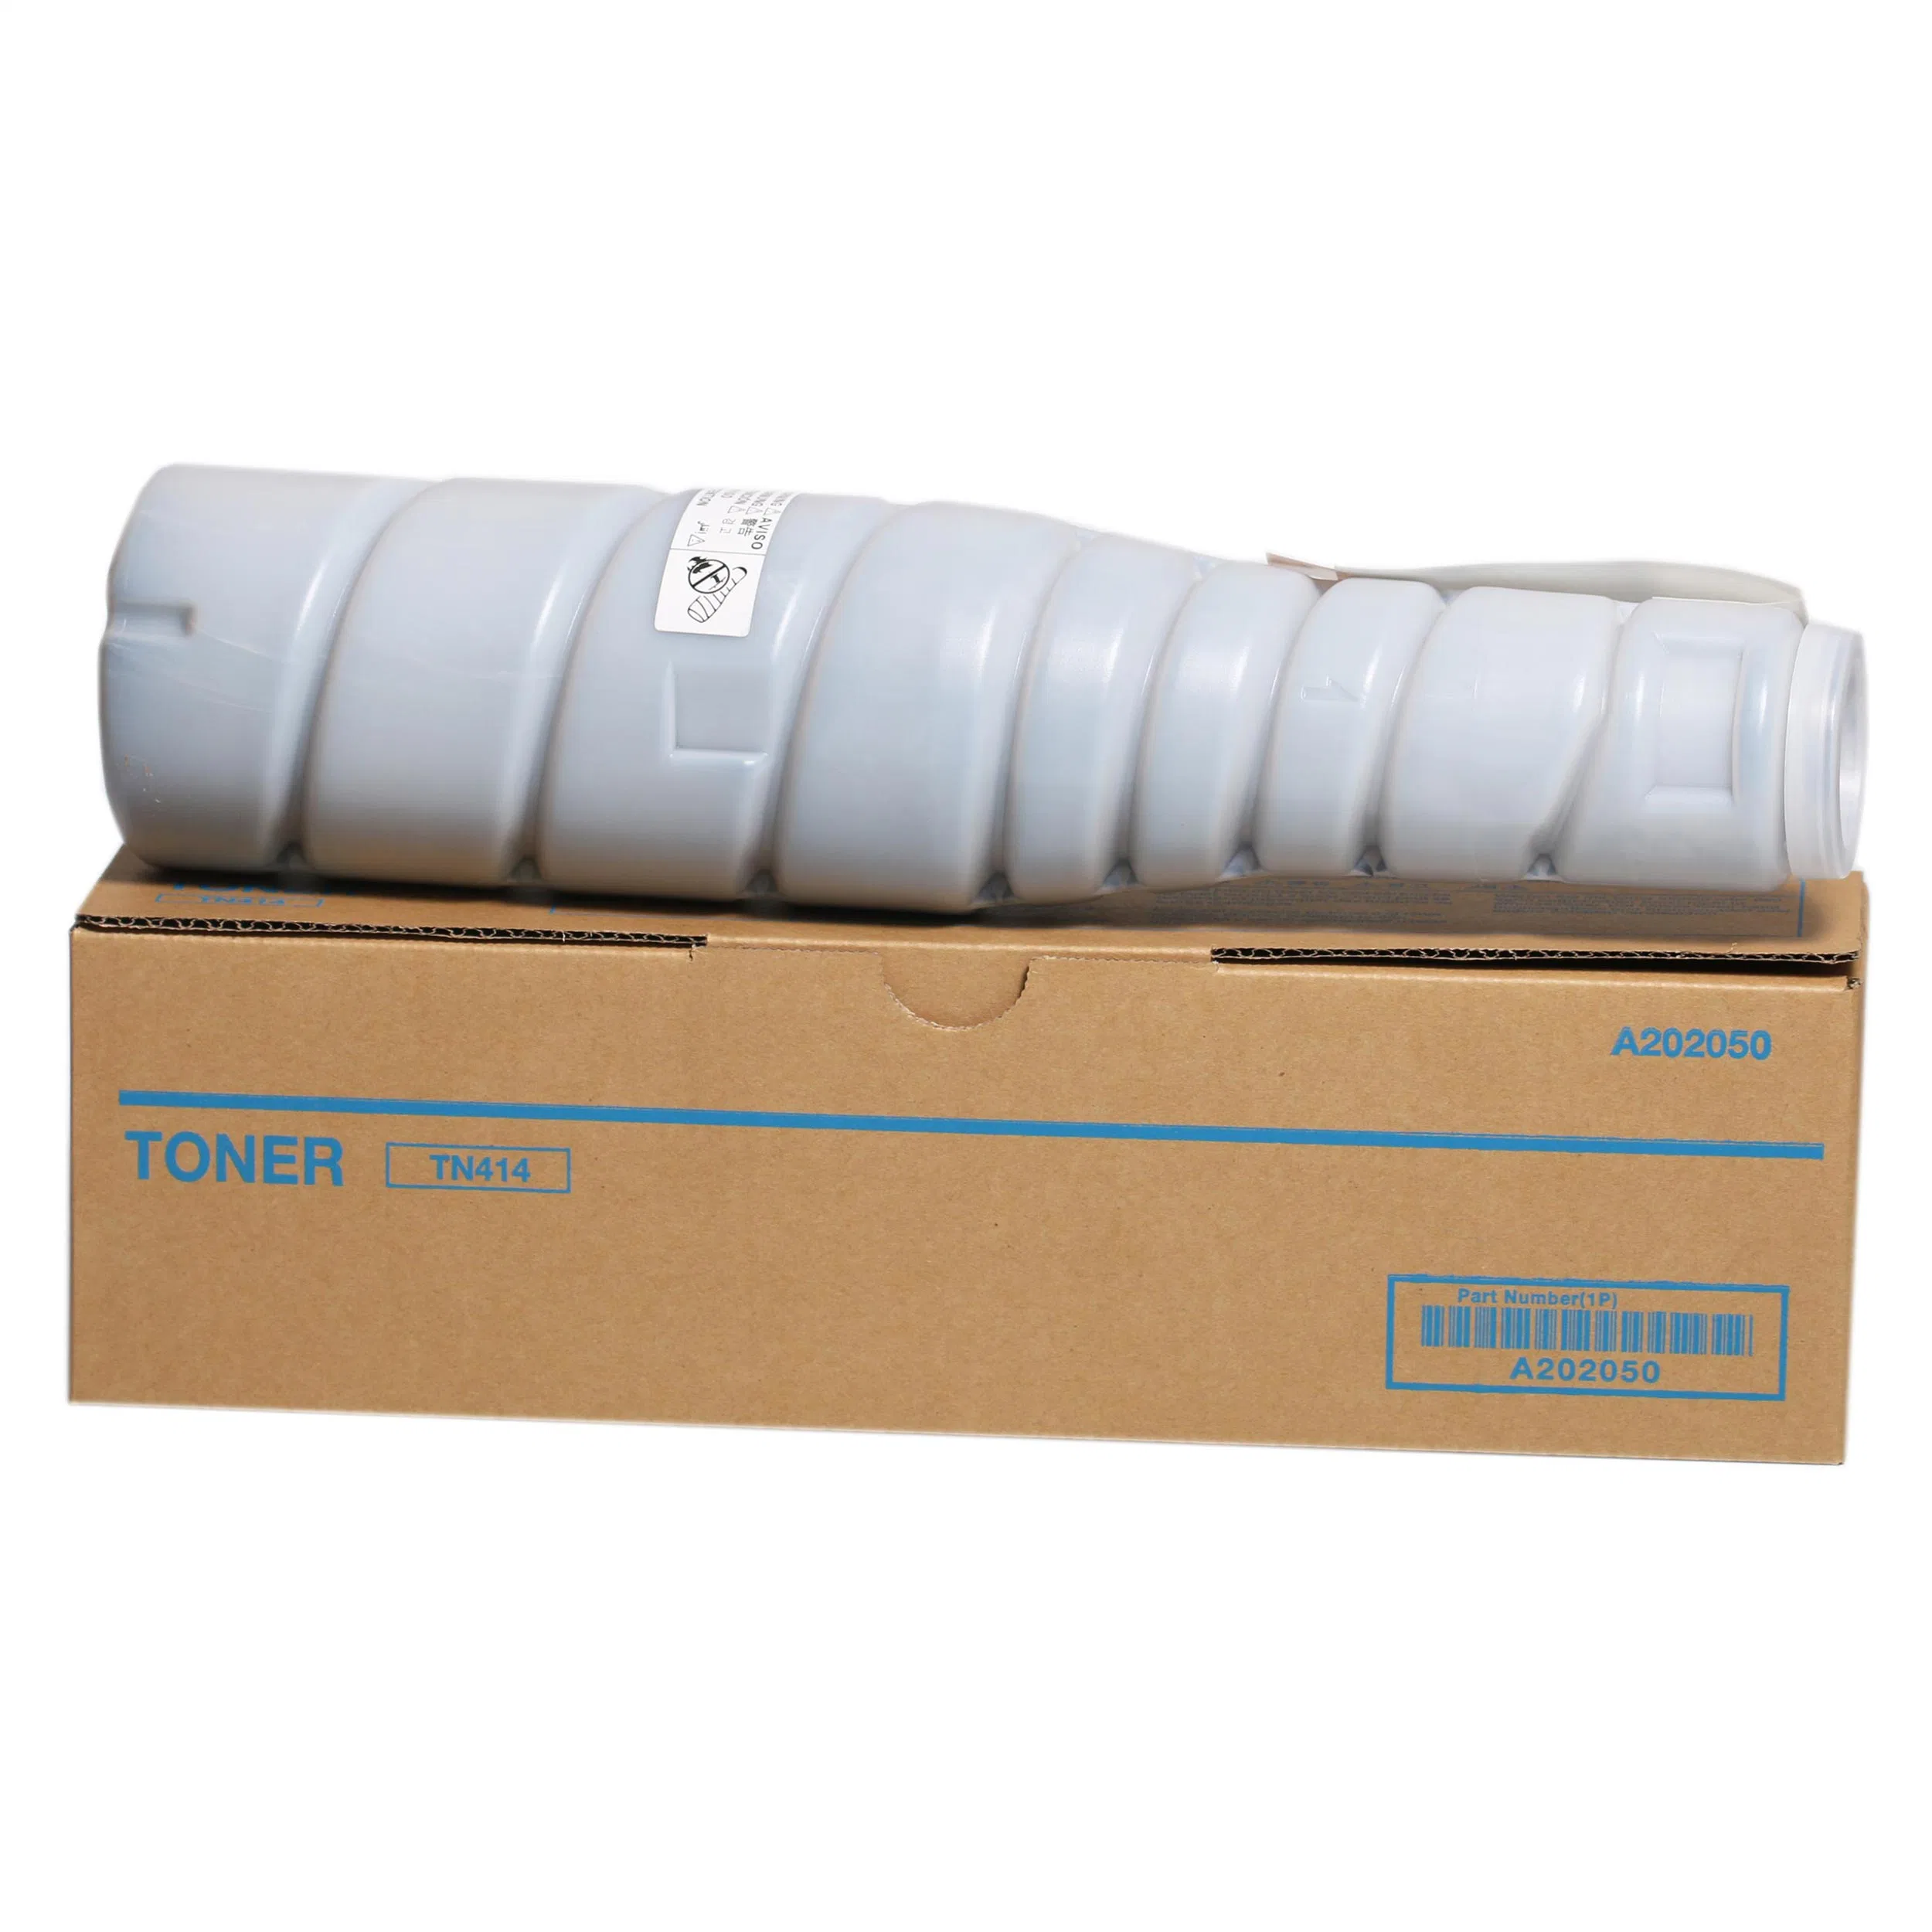 Compatible Tn414 Copier Toner for Konica Minolta Bizhub 363/423